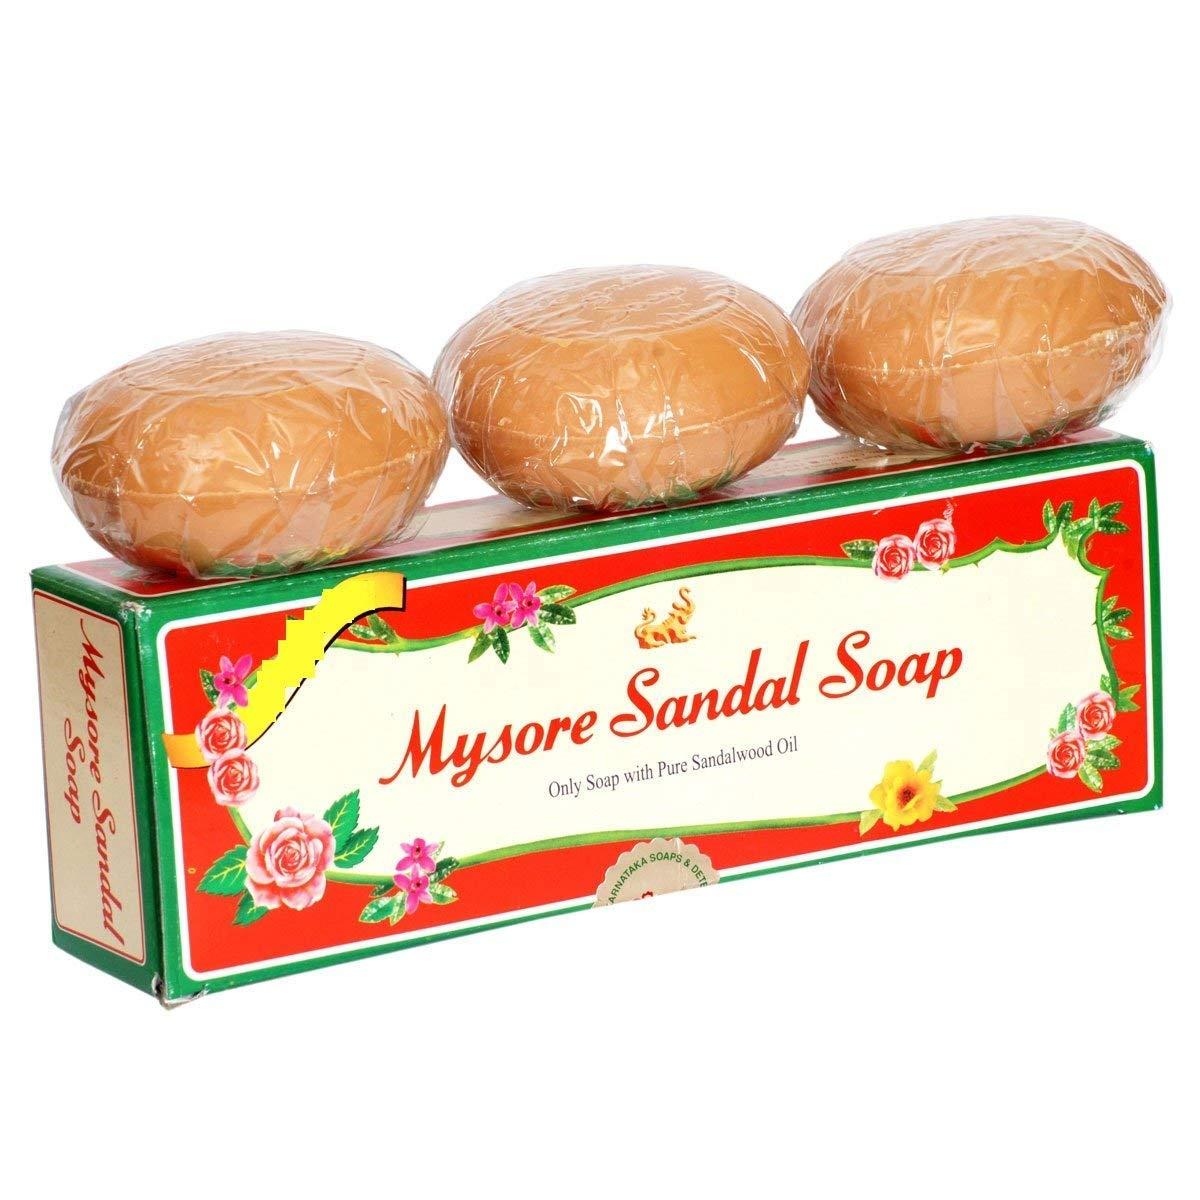 2 Mysore Sandal Soap Factory Images, Stock Photos, 3D objects, & Vectors |  Shutterstock